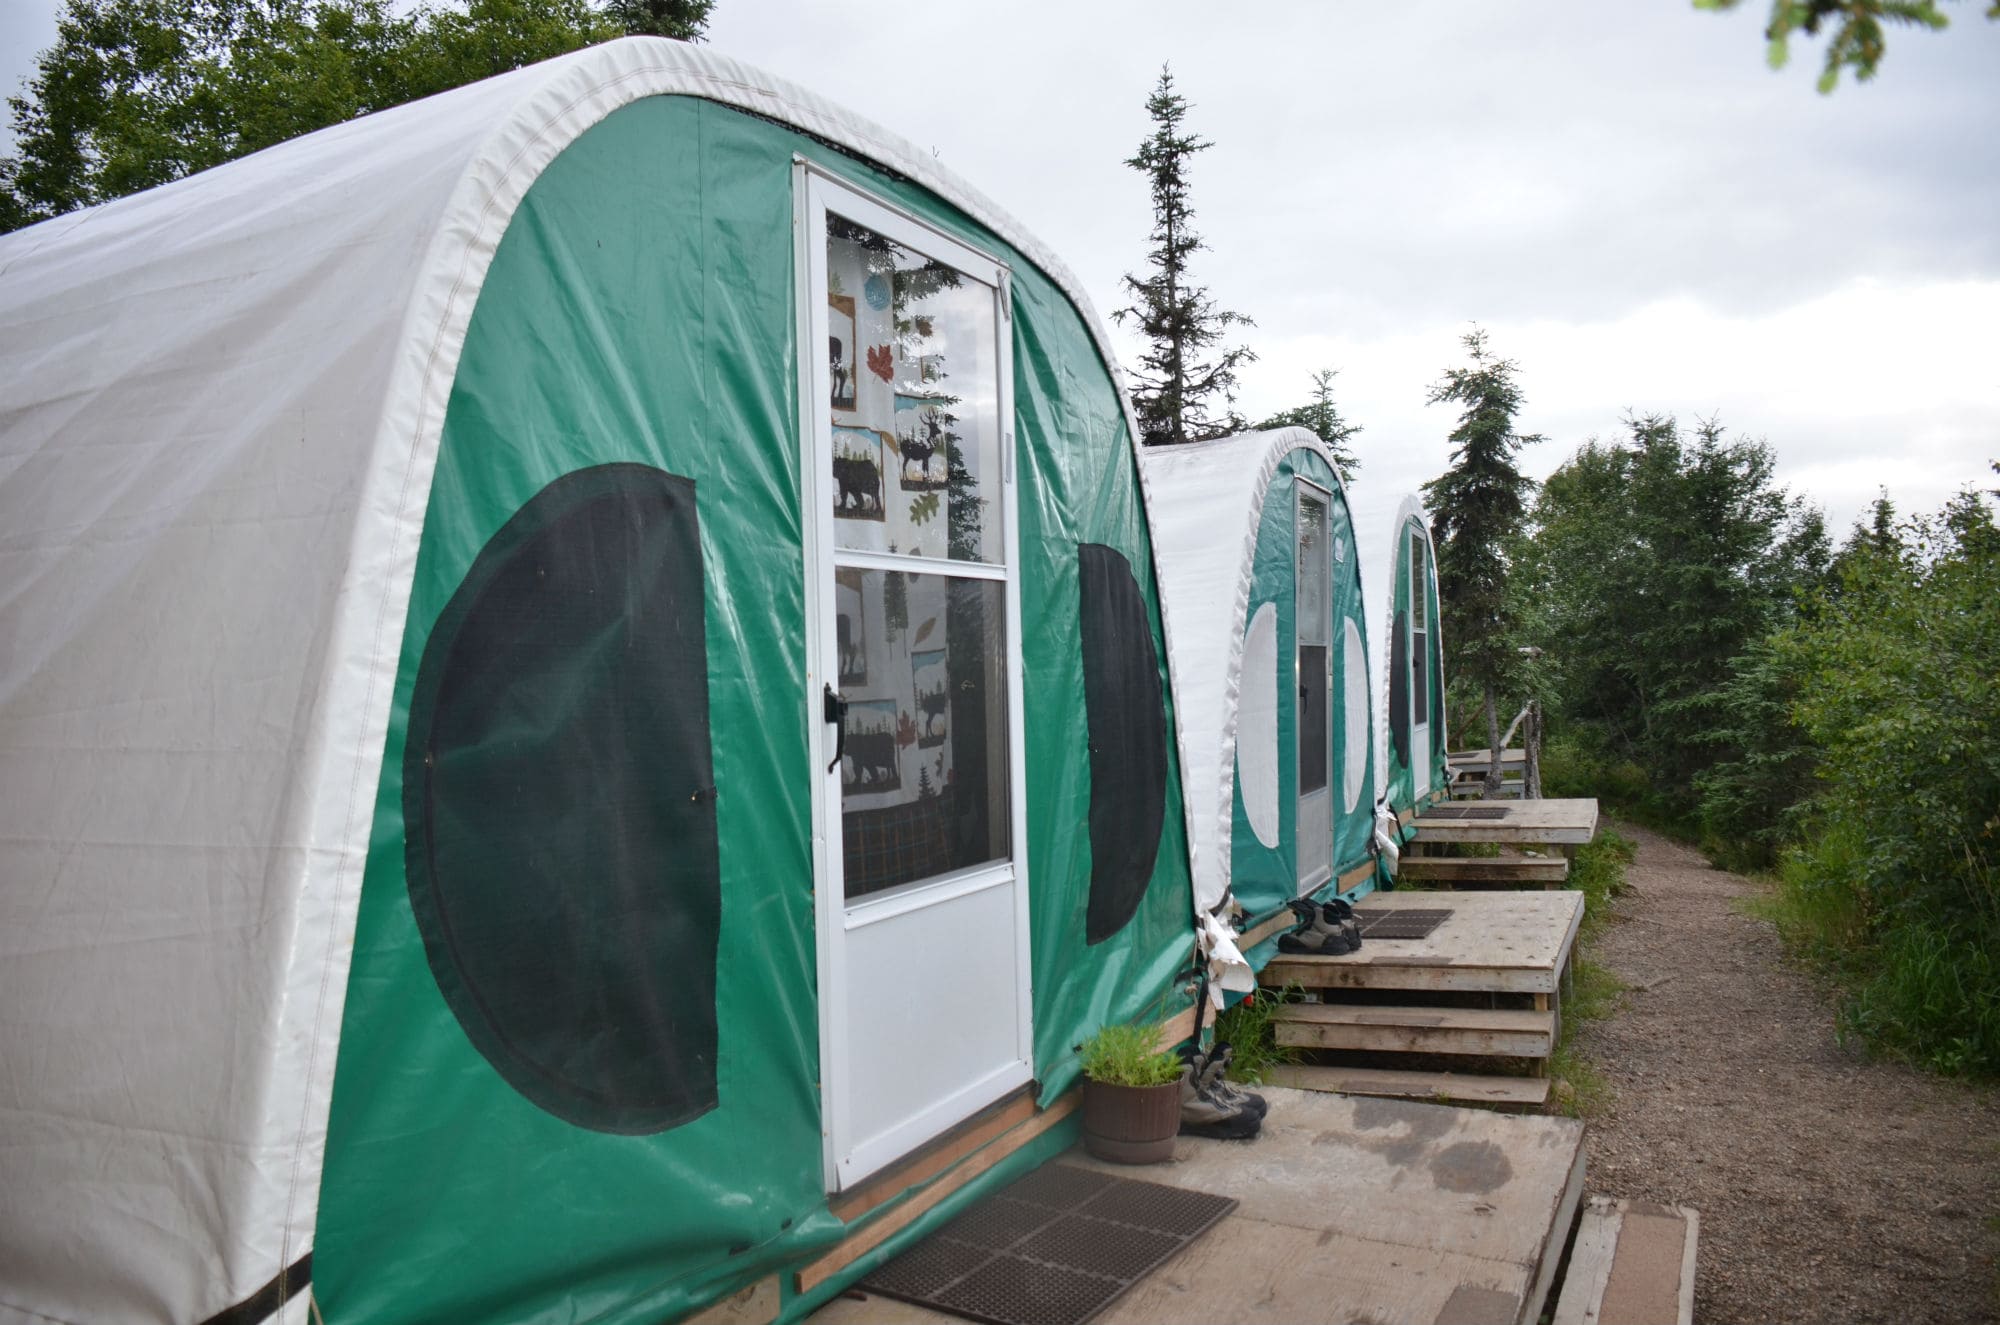 WeatherPort cabins at Angler's Alibi fishing lodge